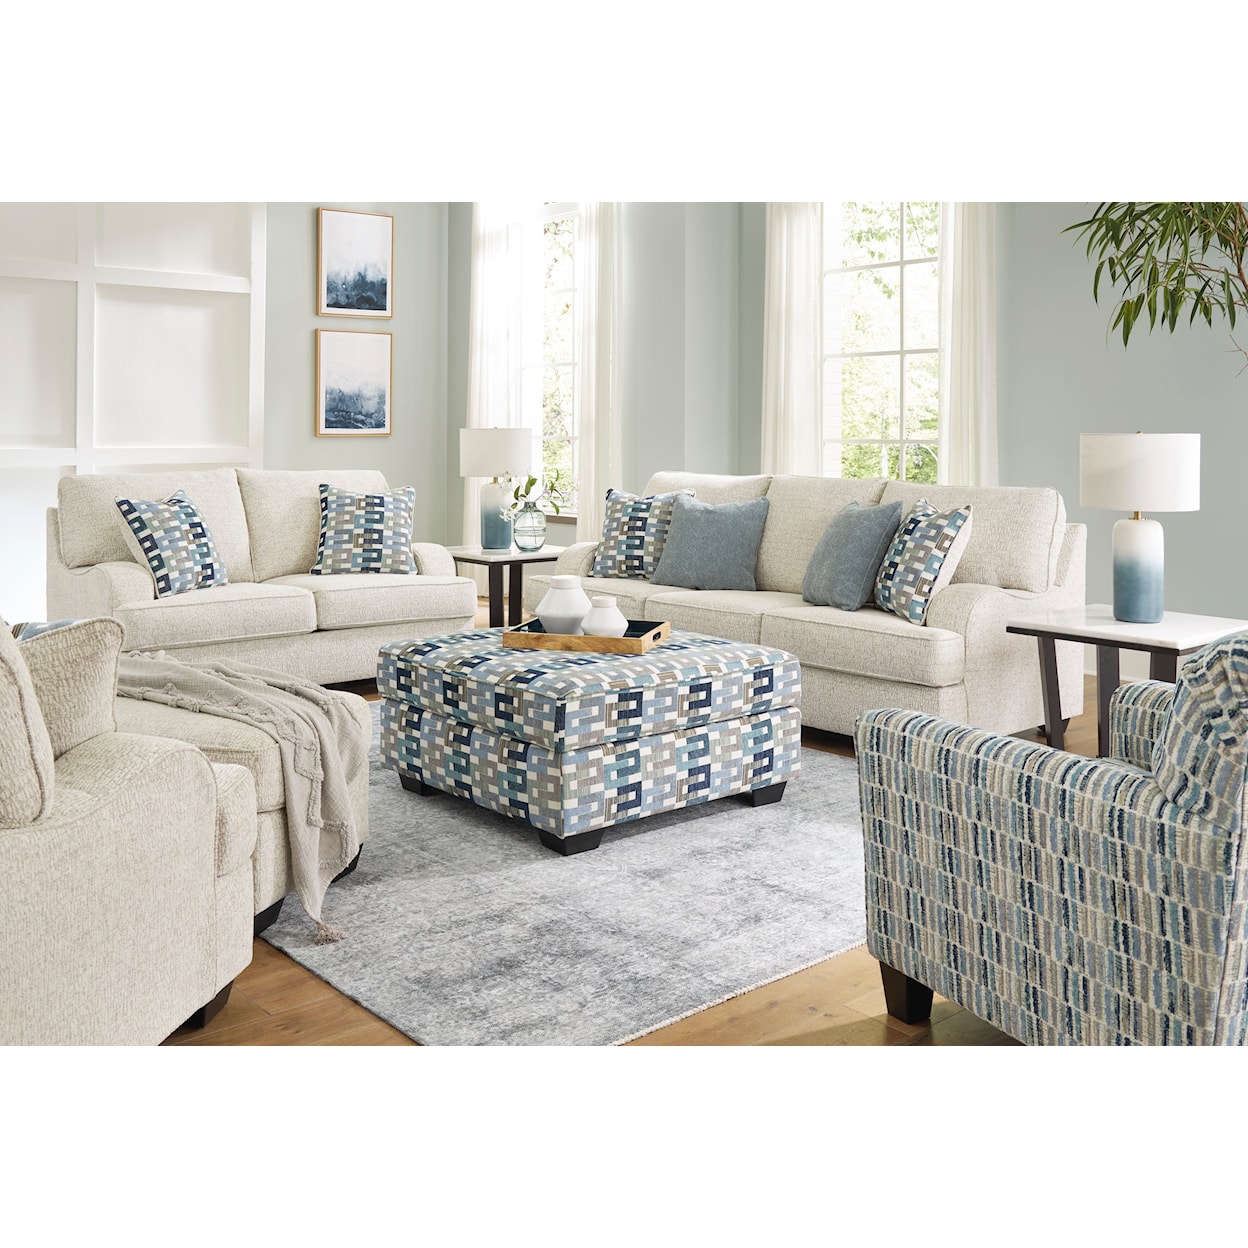 Ashley Furniture Signature Design Valerano 6-Piece Living Room Set